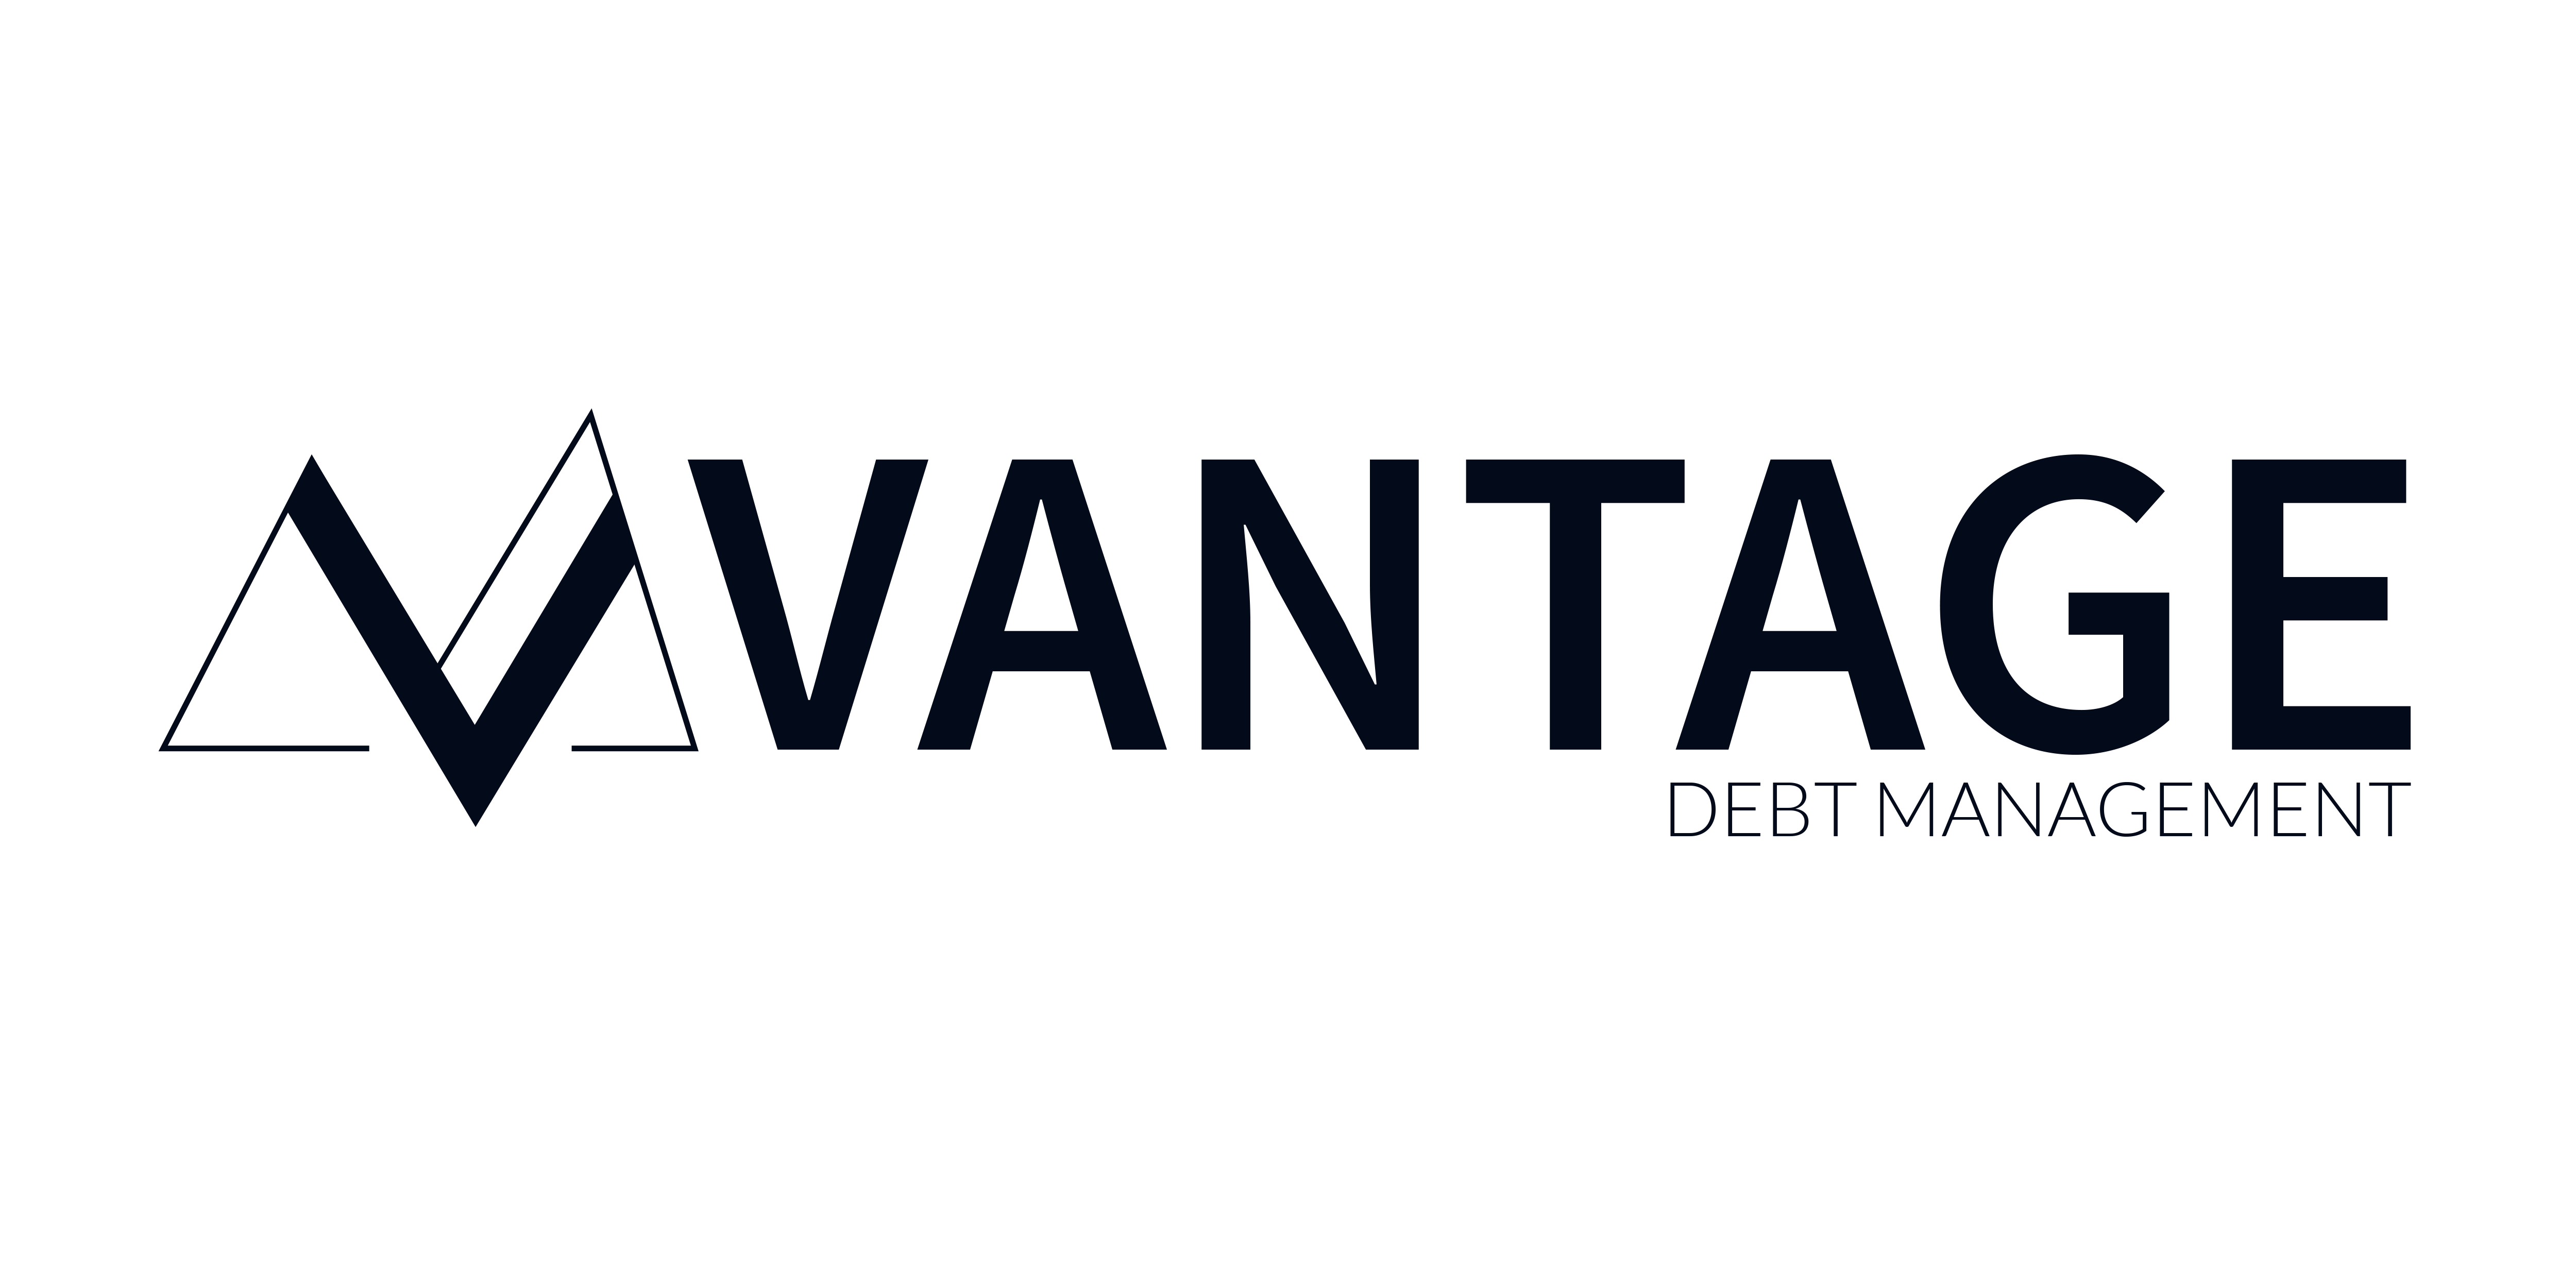 Vantage Debt Management The Debt Expert You Can Trust